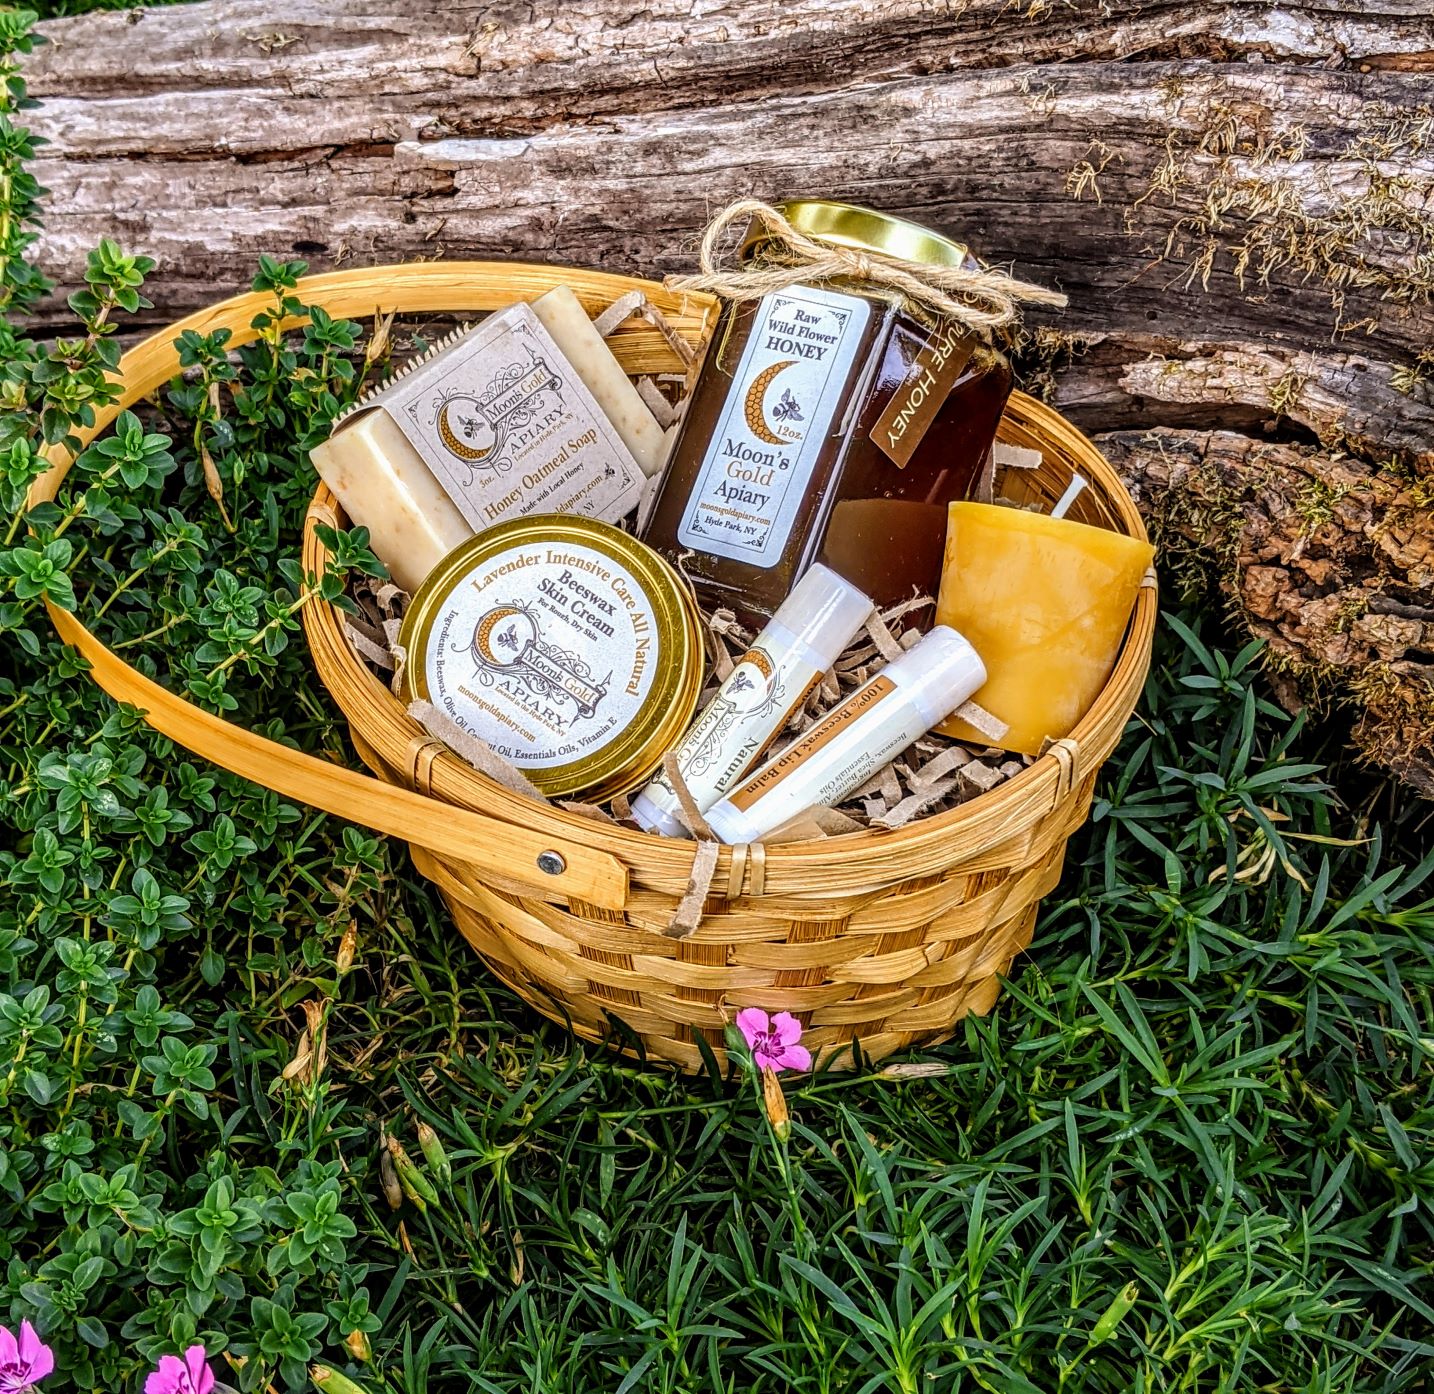 Moon's Gold Apiary Honey Gift Basket